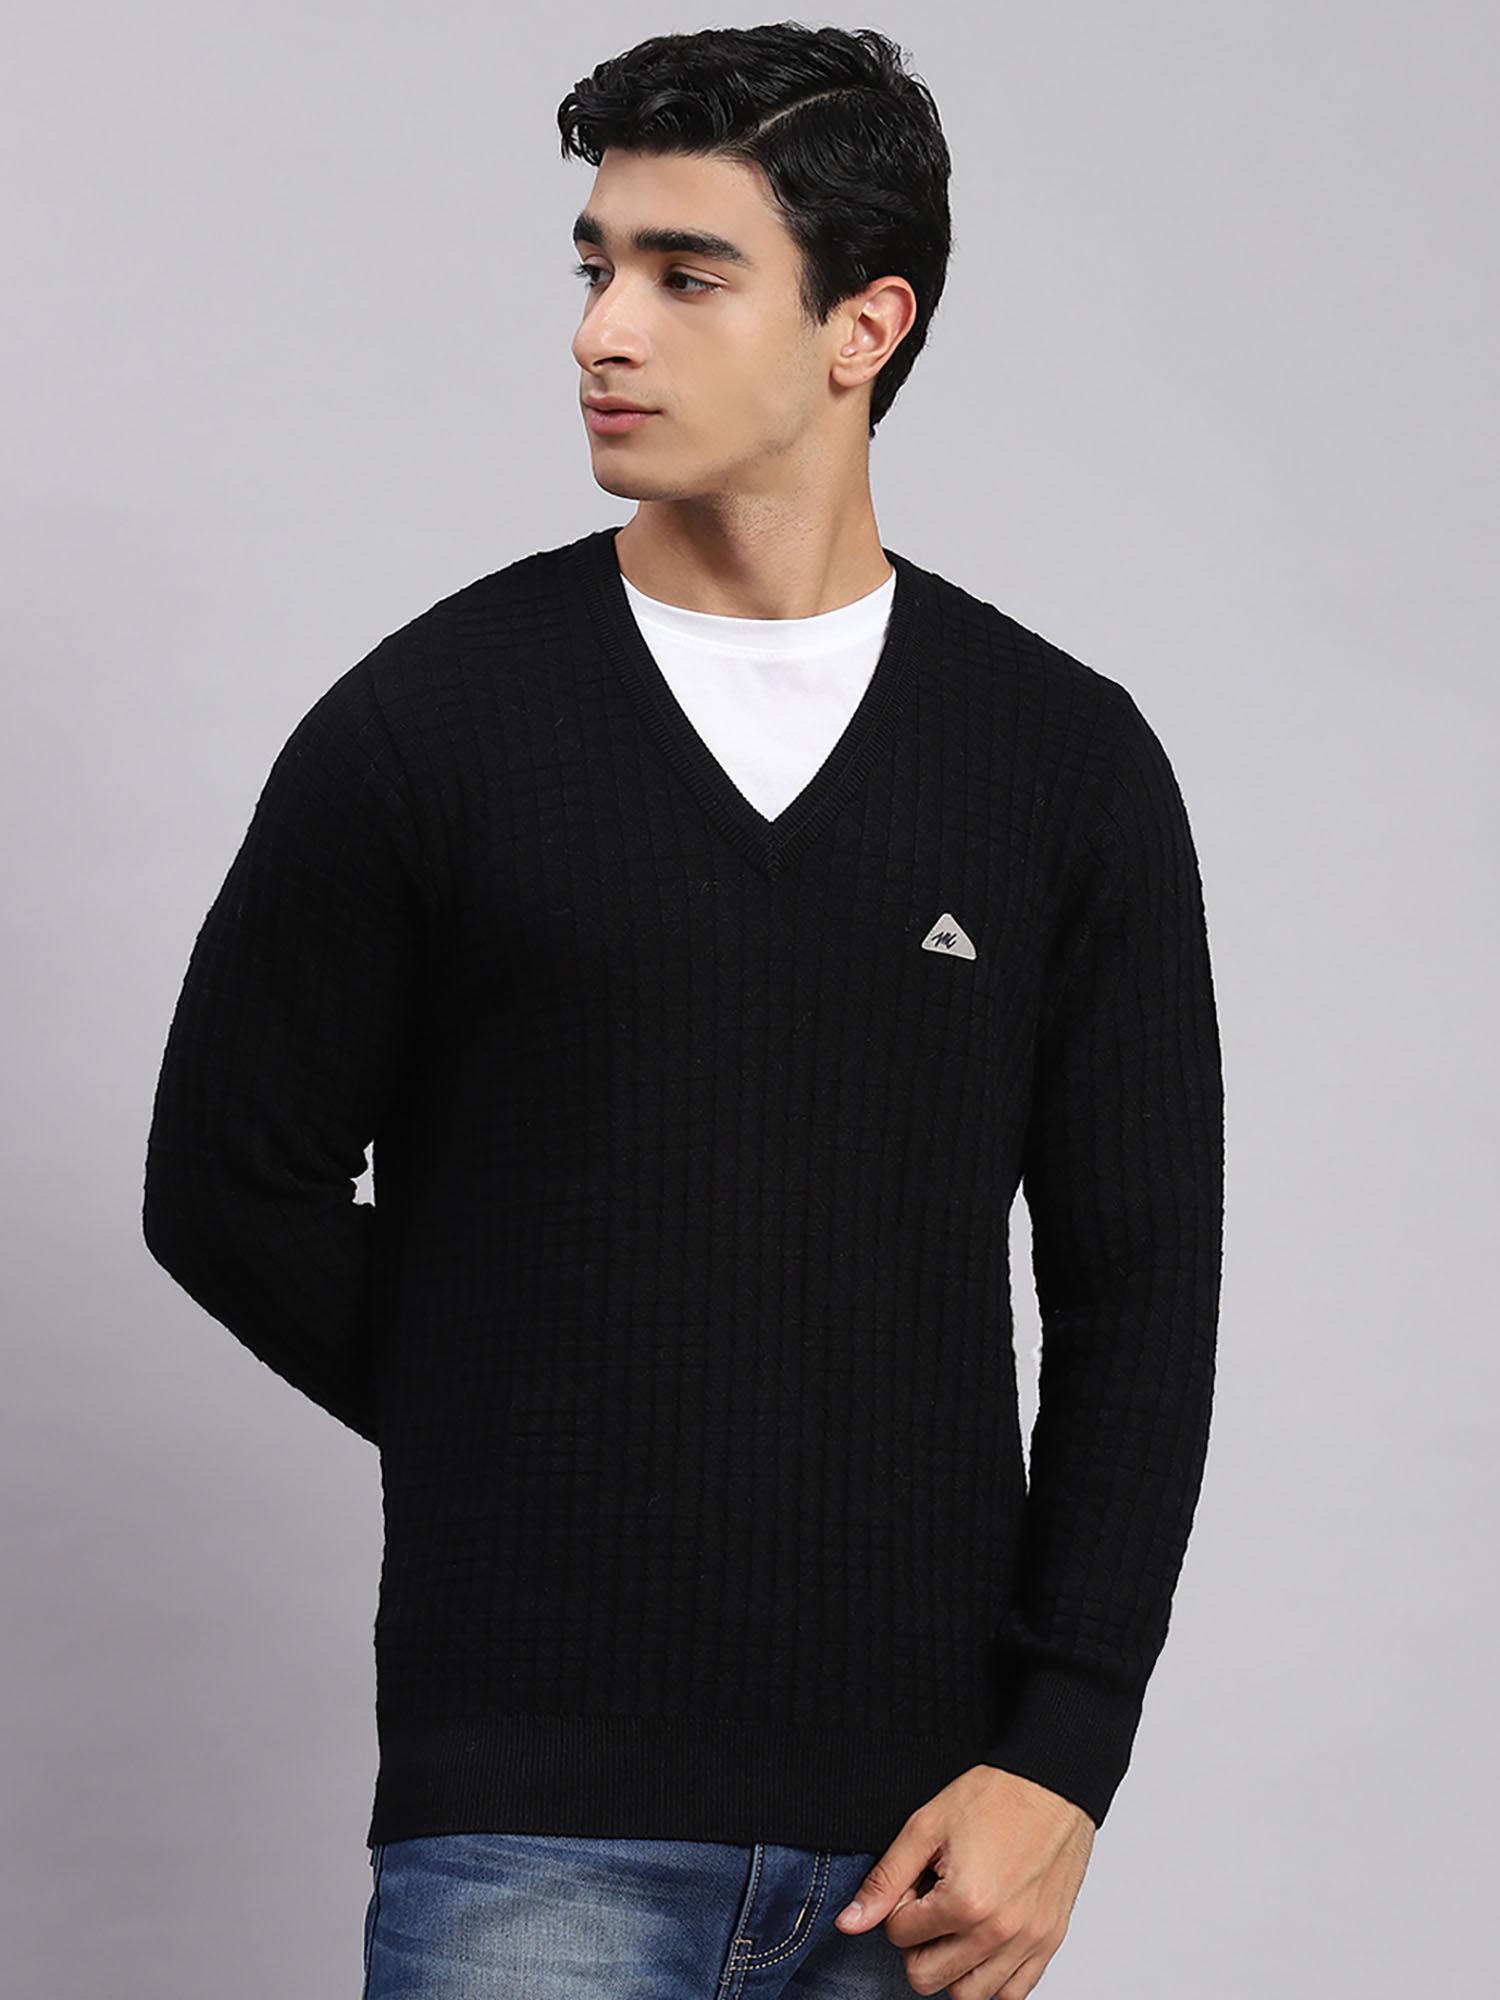 black-self-design-v-neck-sweater